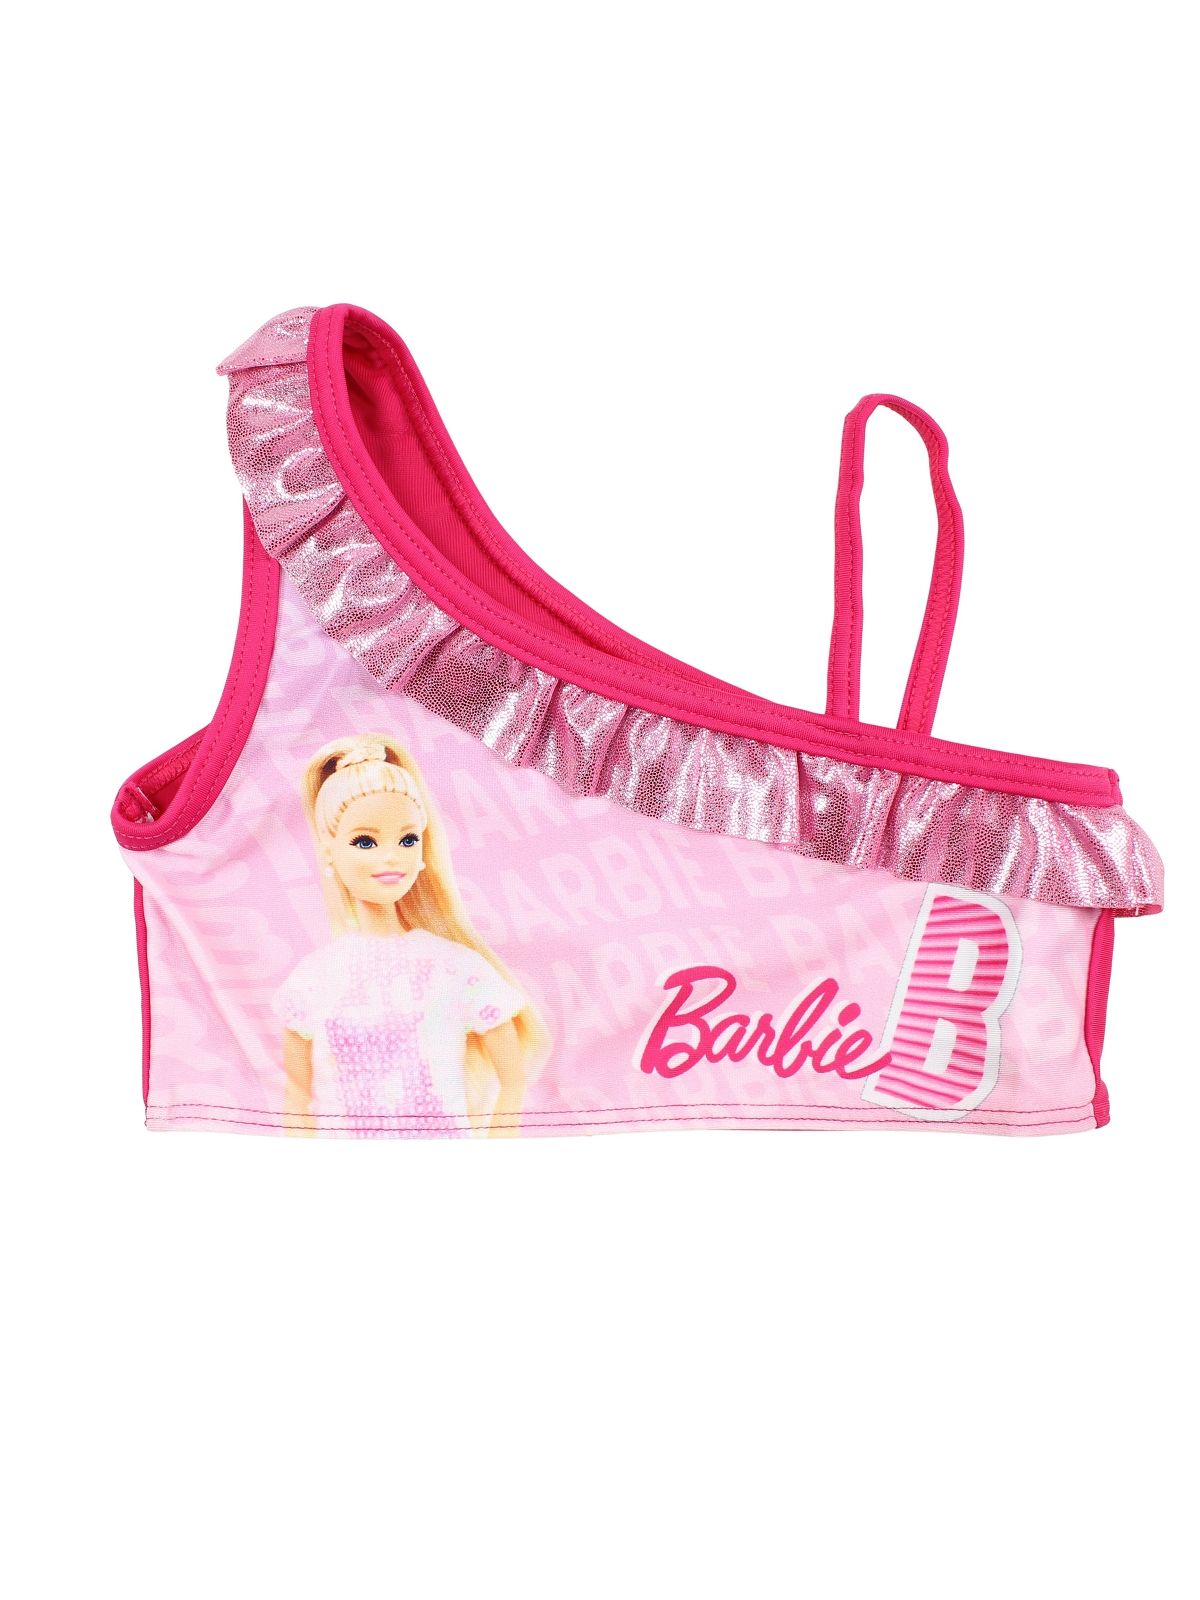 Barbie-zwempak.